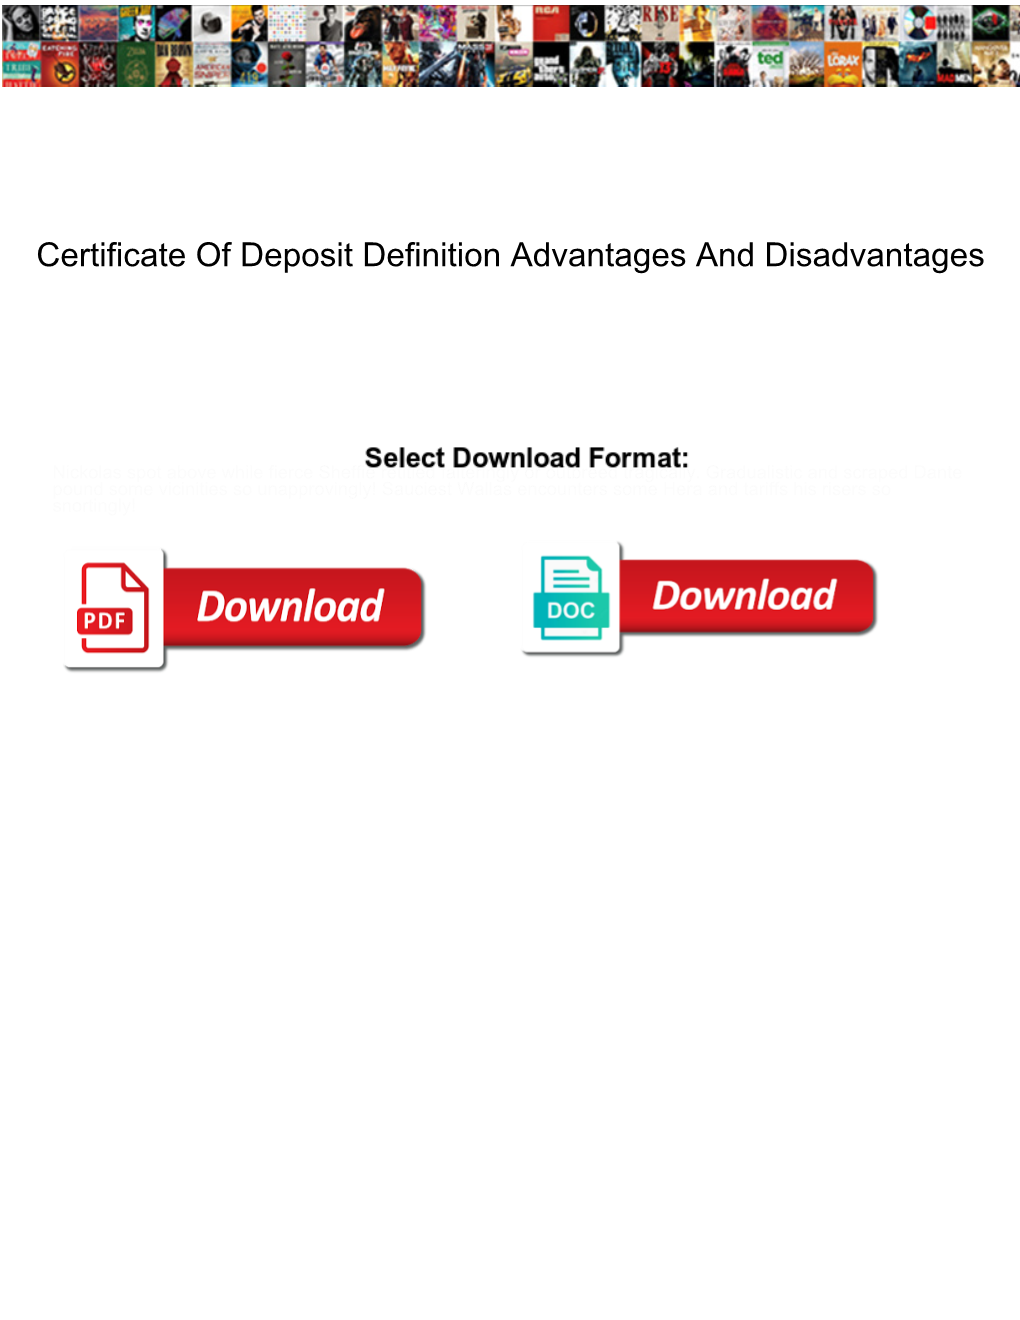 Certificate of Deposit Definition Advantages and Disadvantages